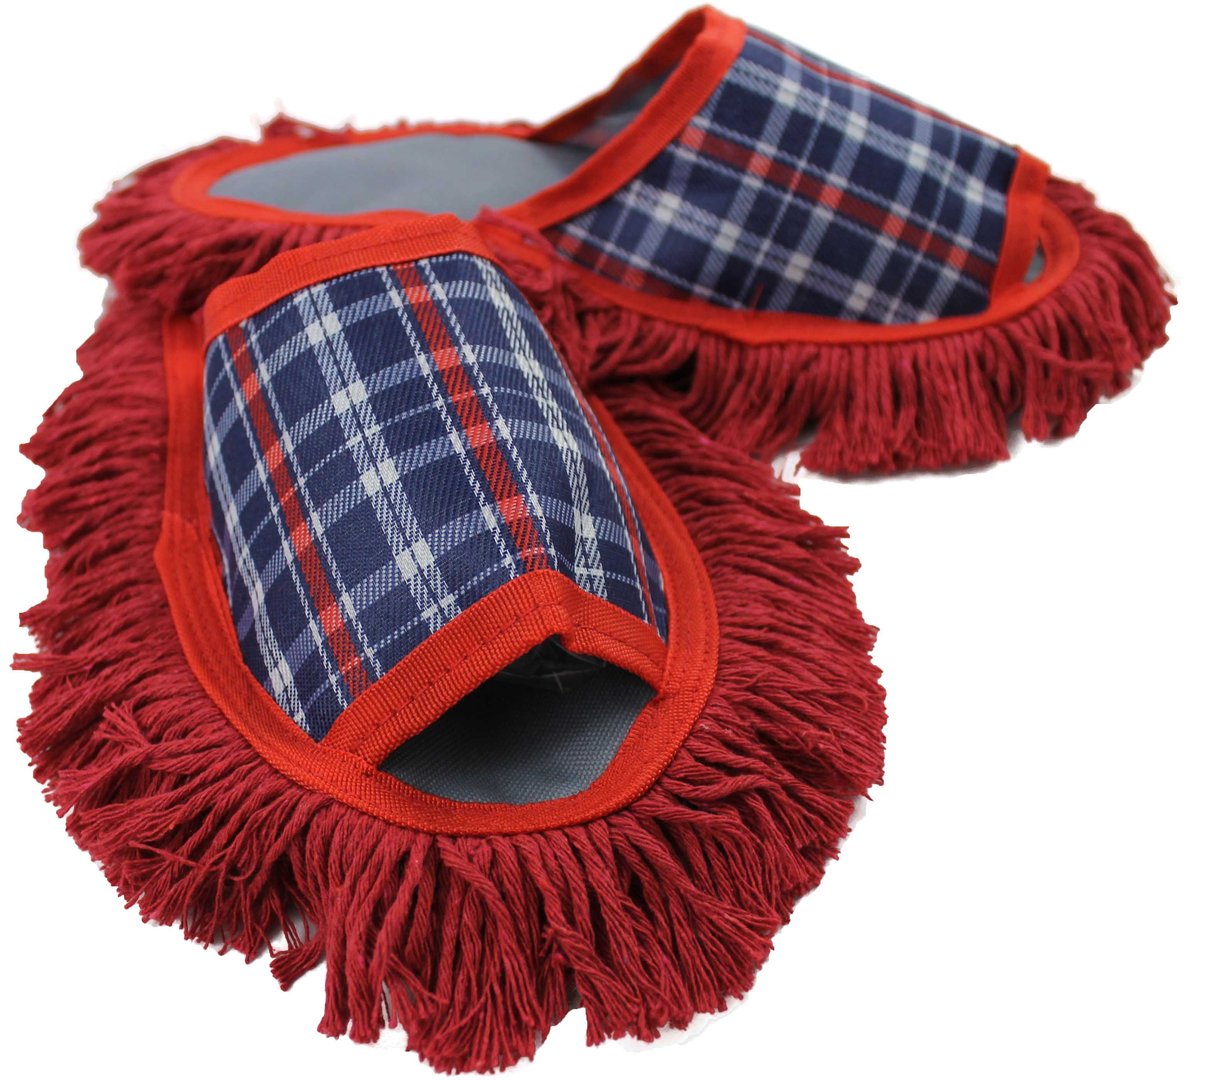 Hausschuhe Mop-Schuhe in rot Baumwolle-sohle size 40-43 Unisex R-156